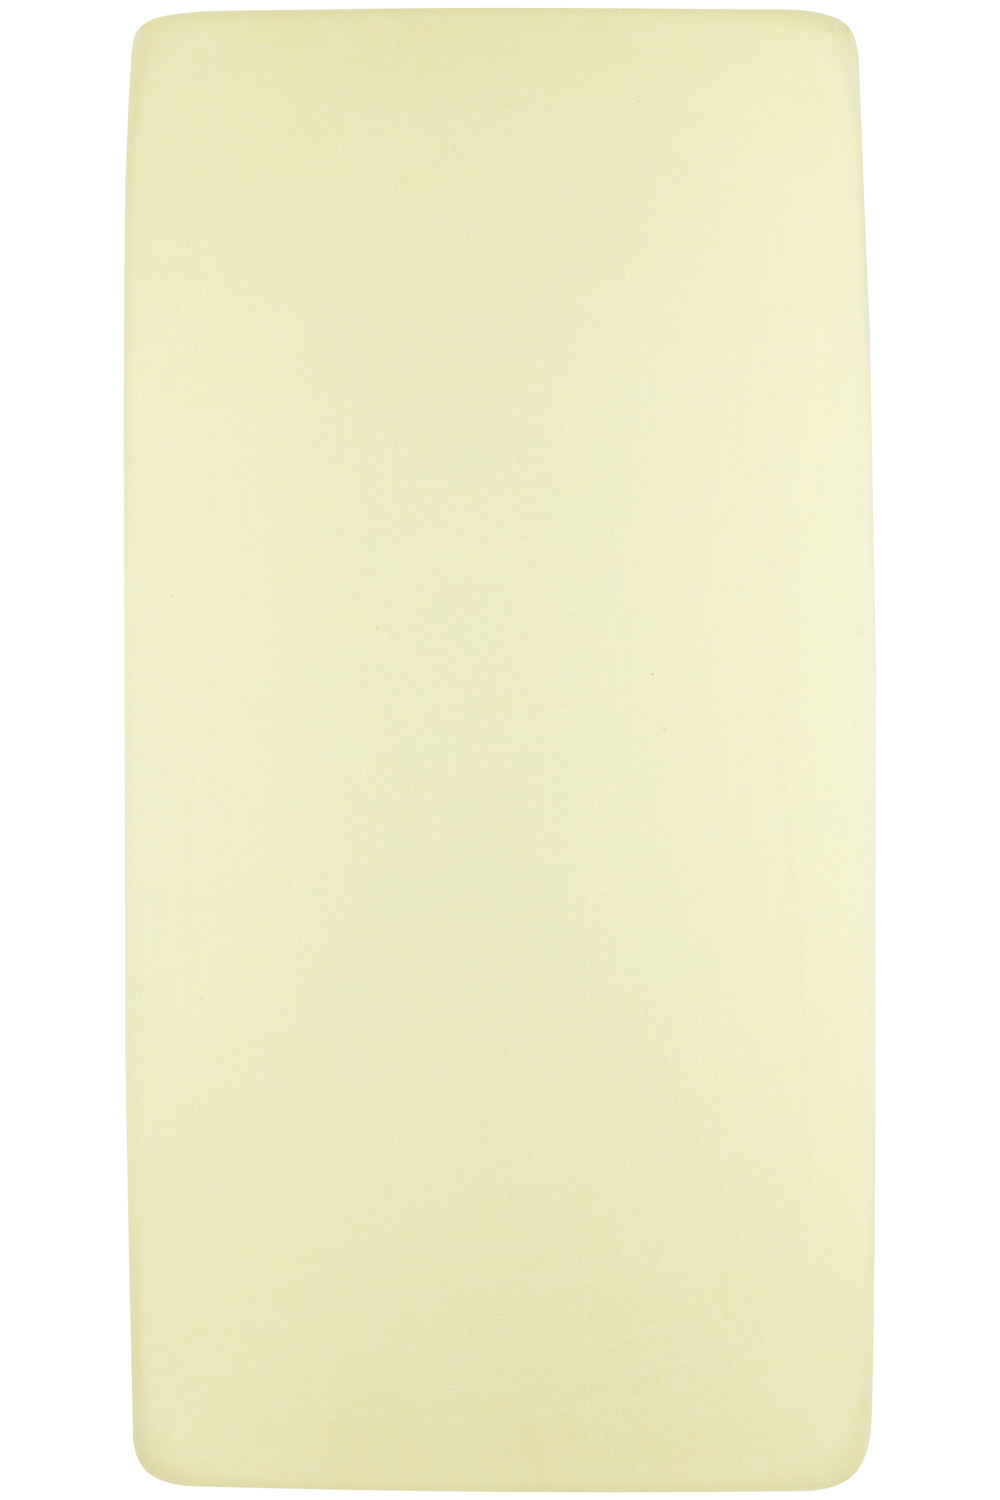 Hoeslaken boxmatras Uni - soft yellow - 75x95cm